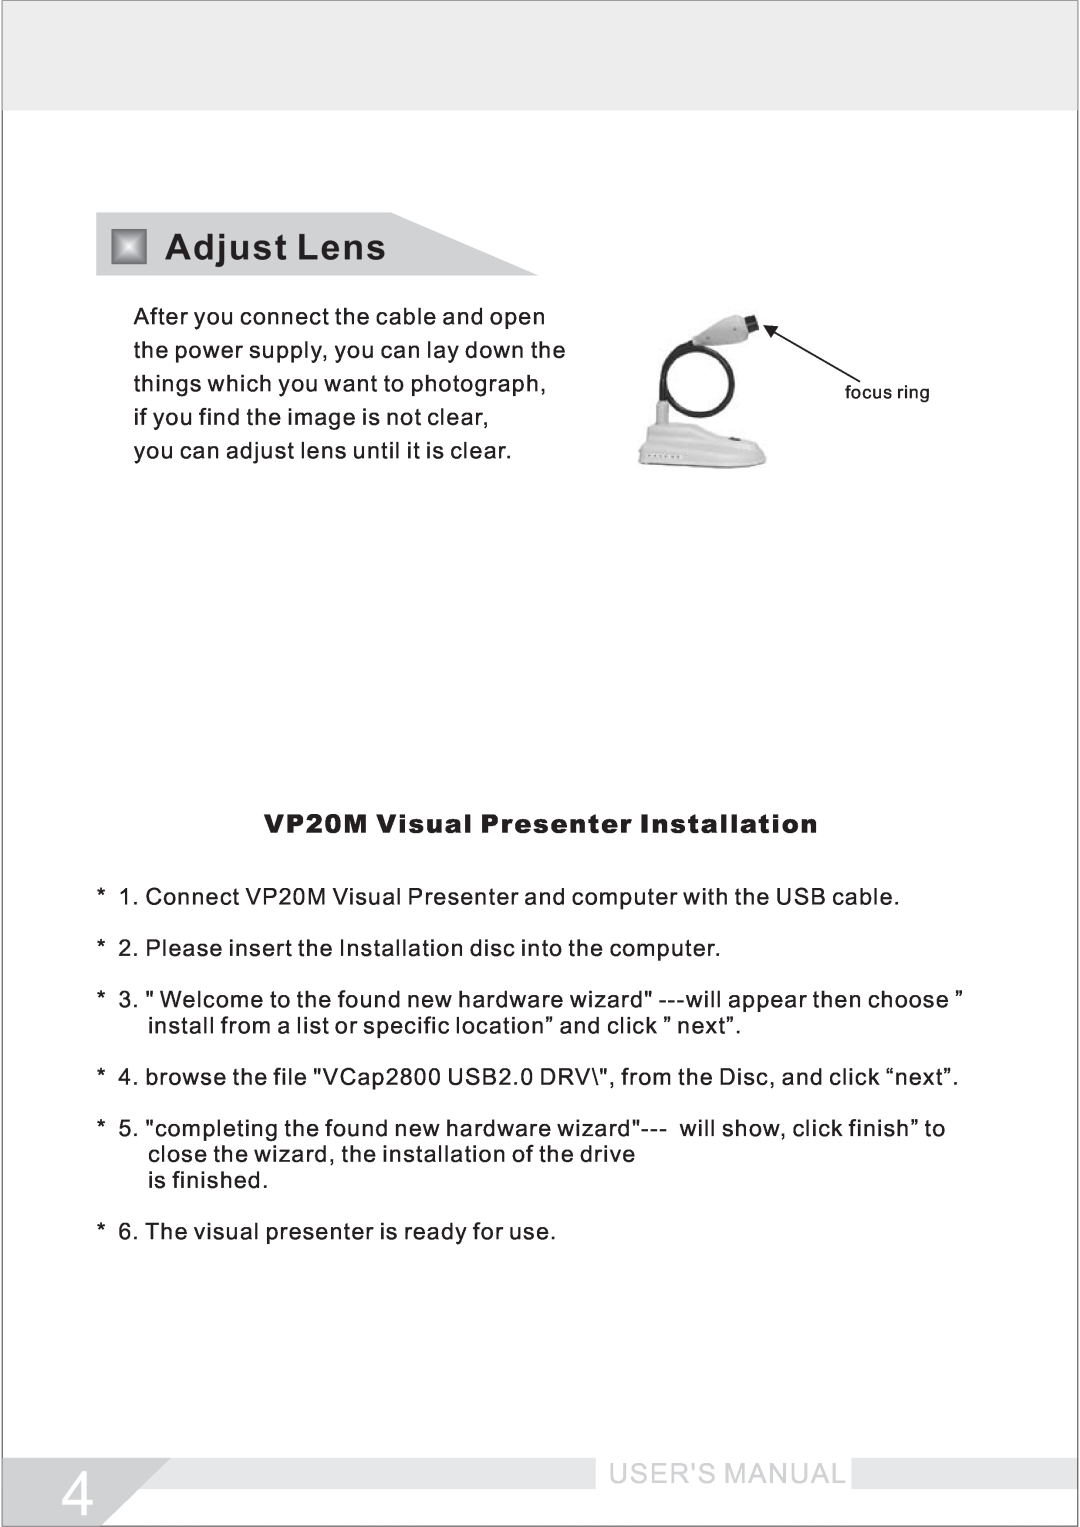 Buhl manual Adjust Lens, VP20M Visual Presenter Installation 